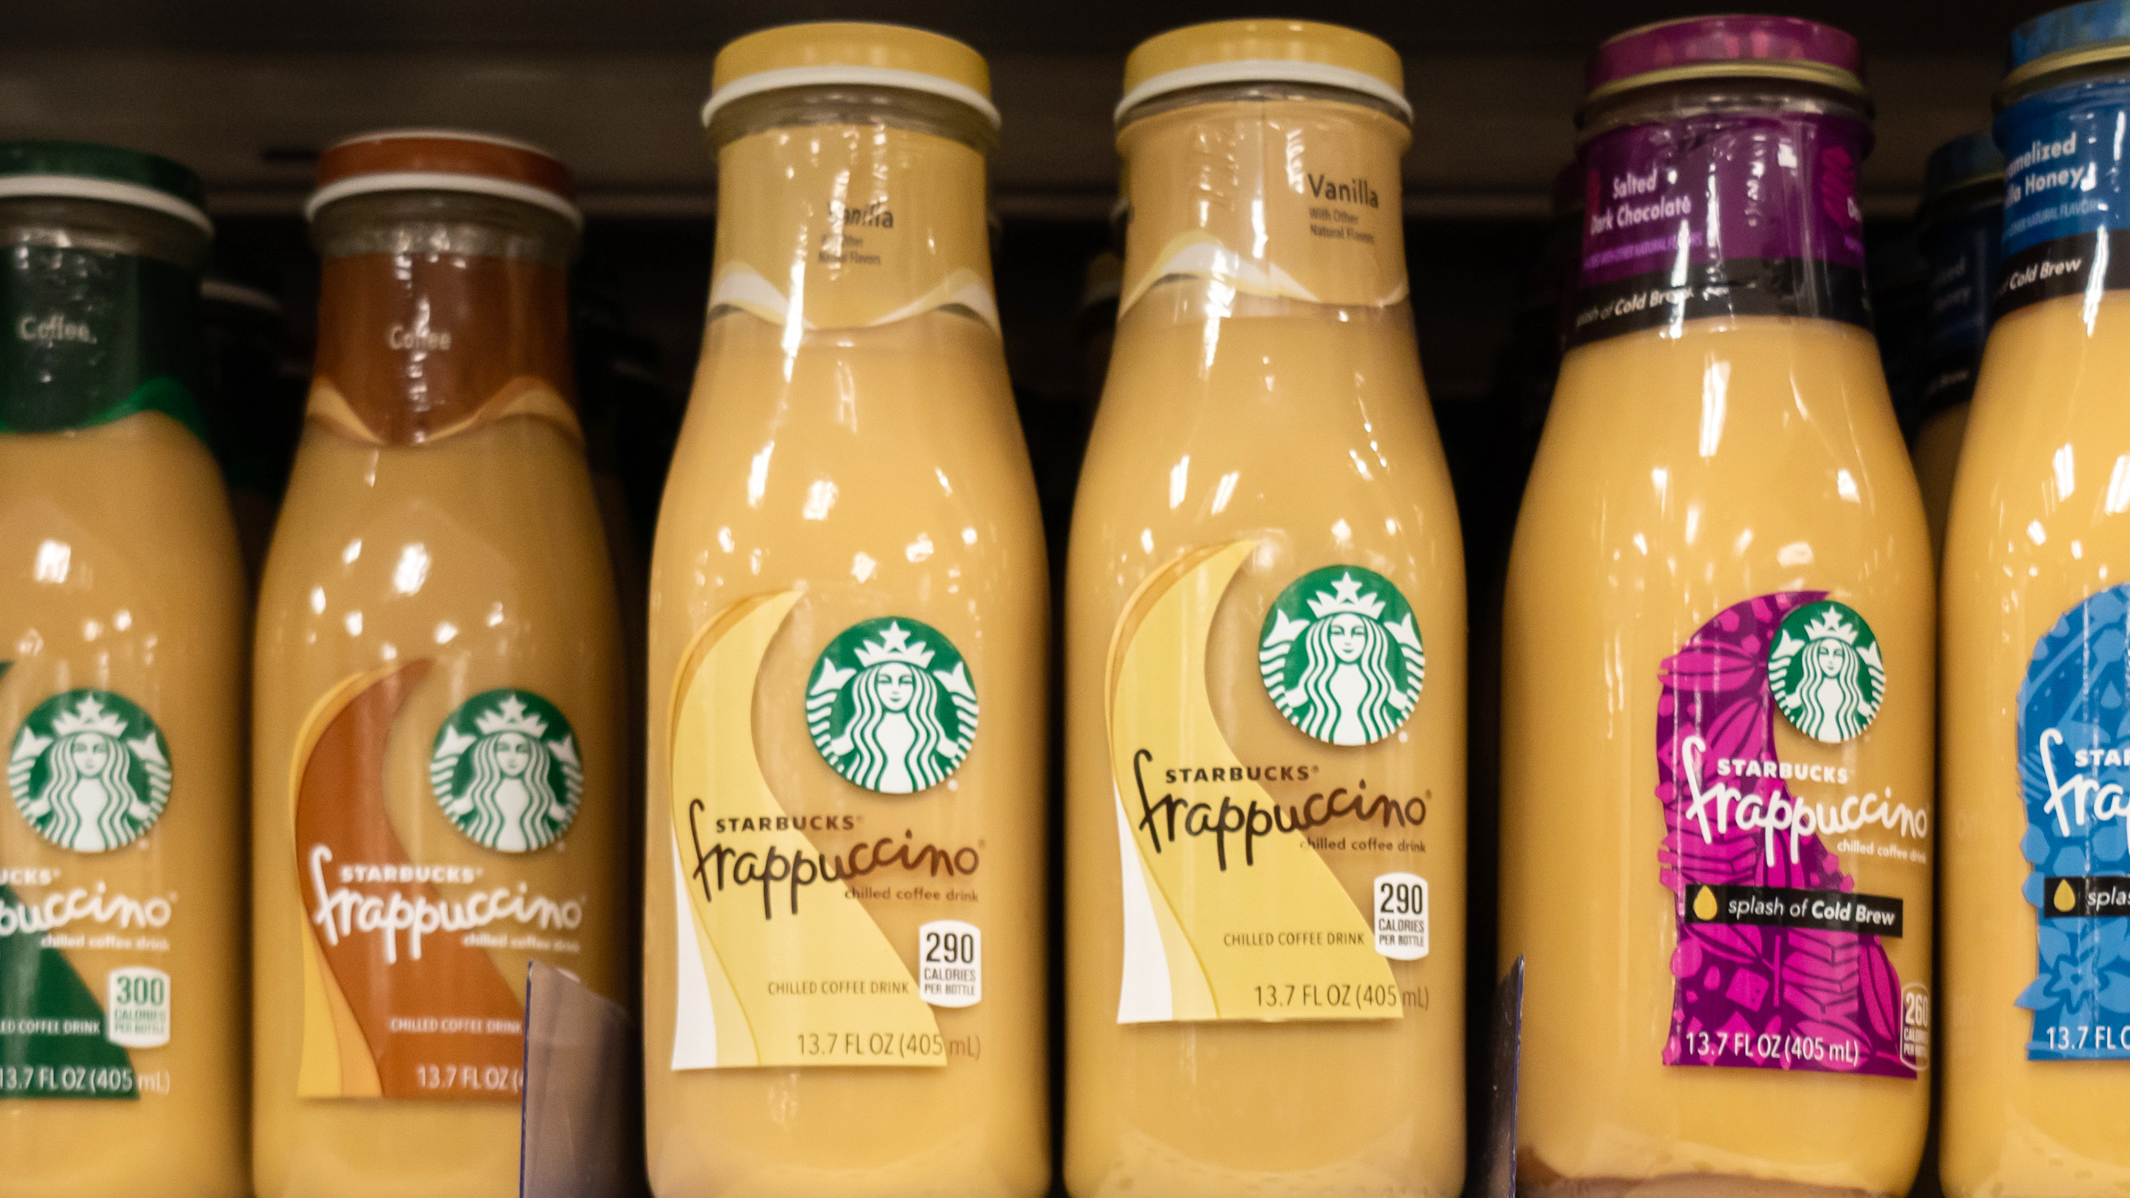 Starbucks Frappuccino bottles recalled 